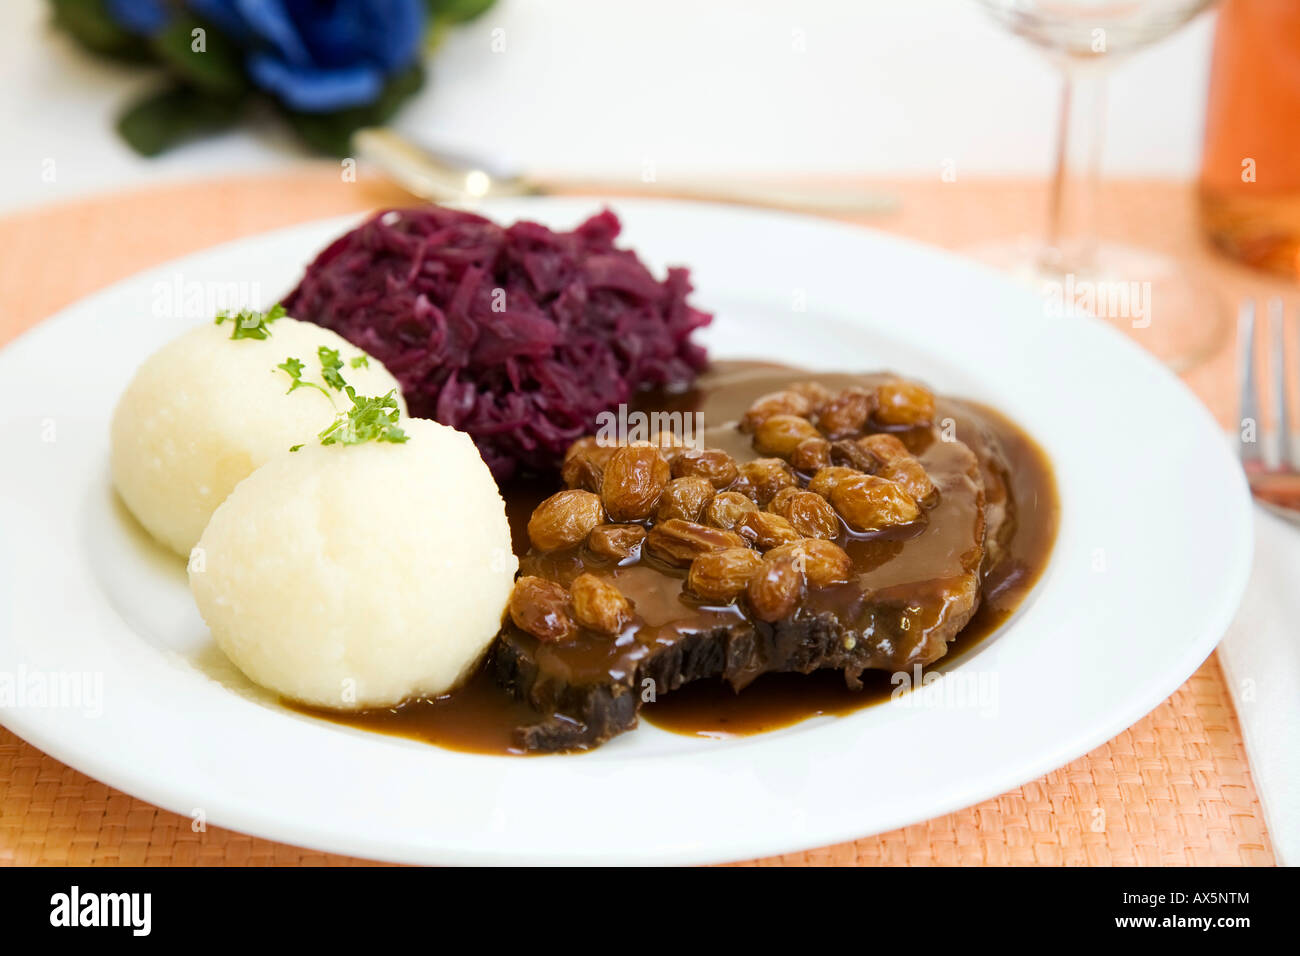 Rhenisch Sauerbraten (marinated beef roast) with potato dumplings and red cabbage Stock Photo